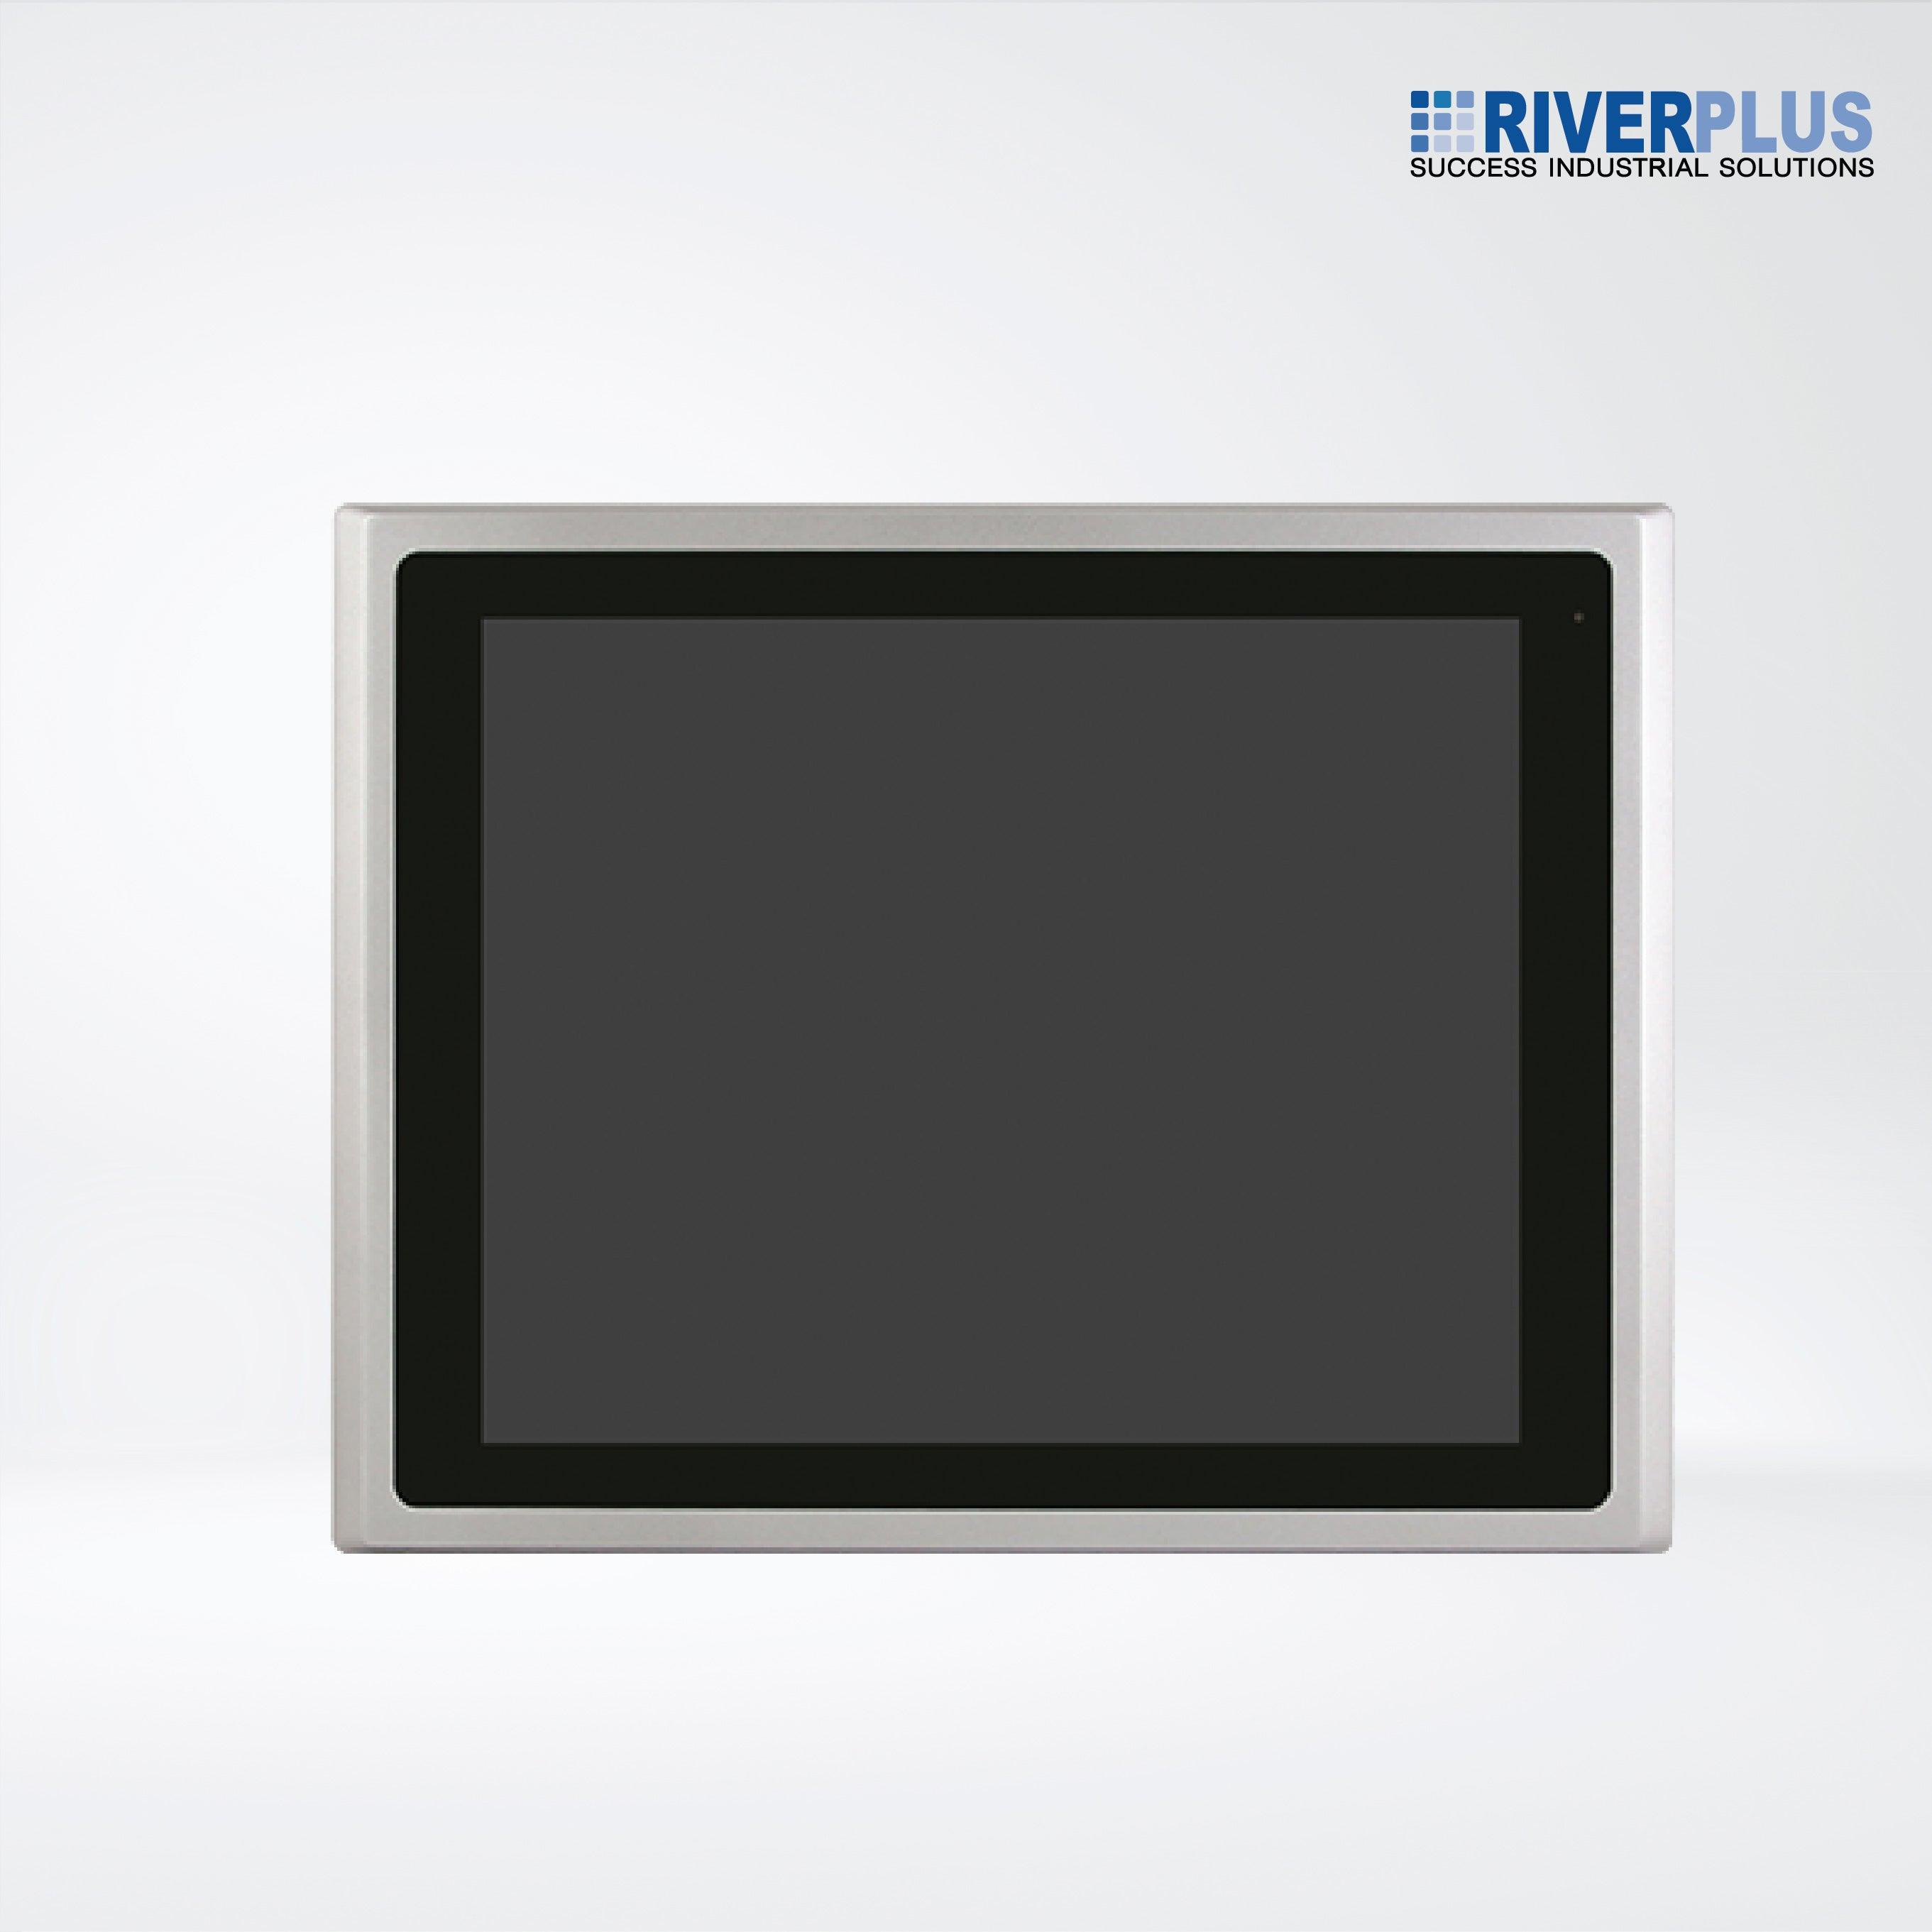 ARCHMI-817H 17" Intel Celeron N2930/ Atom E3845, Fanless Industrial Compact Size Panel PC - Riverplus